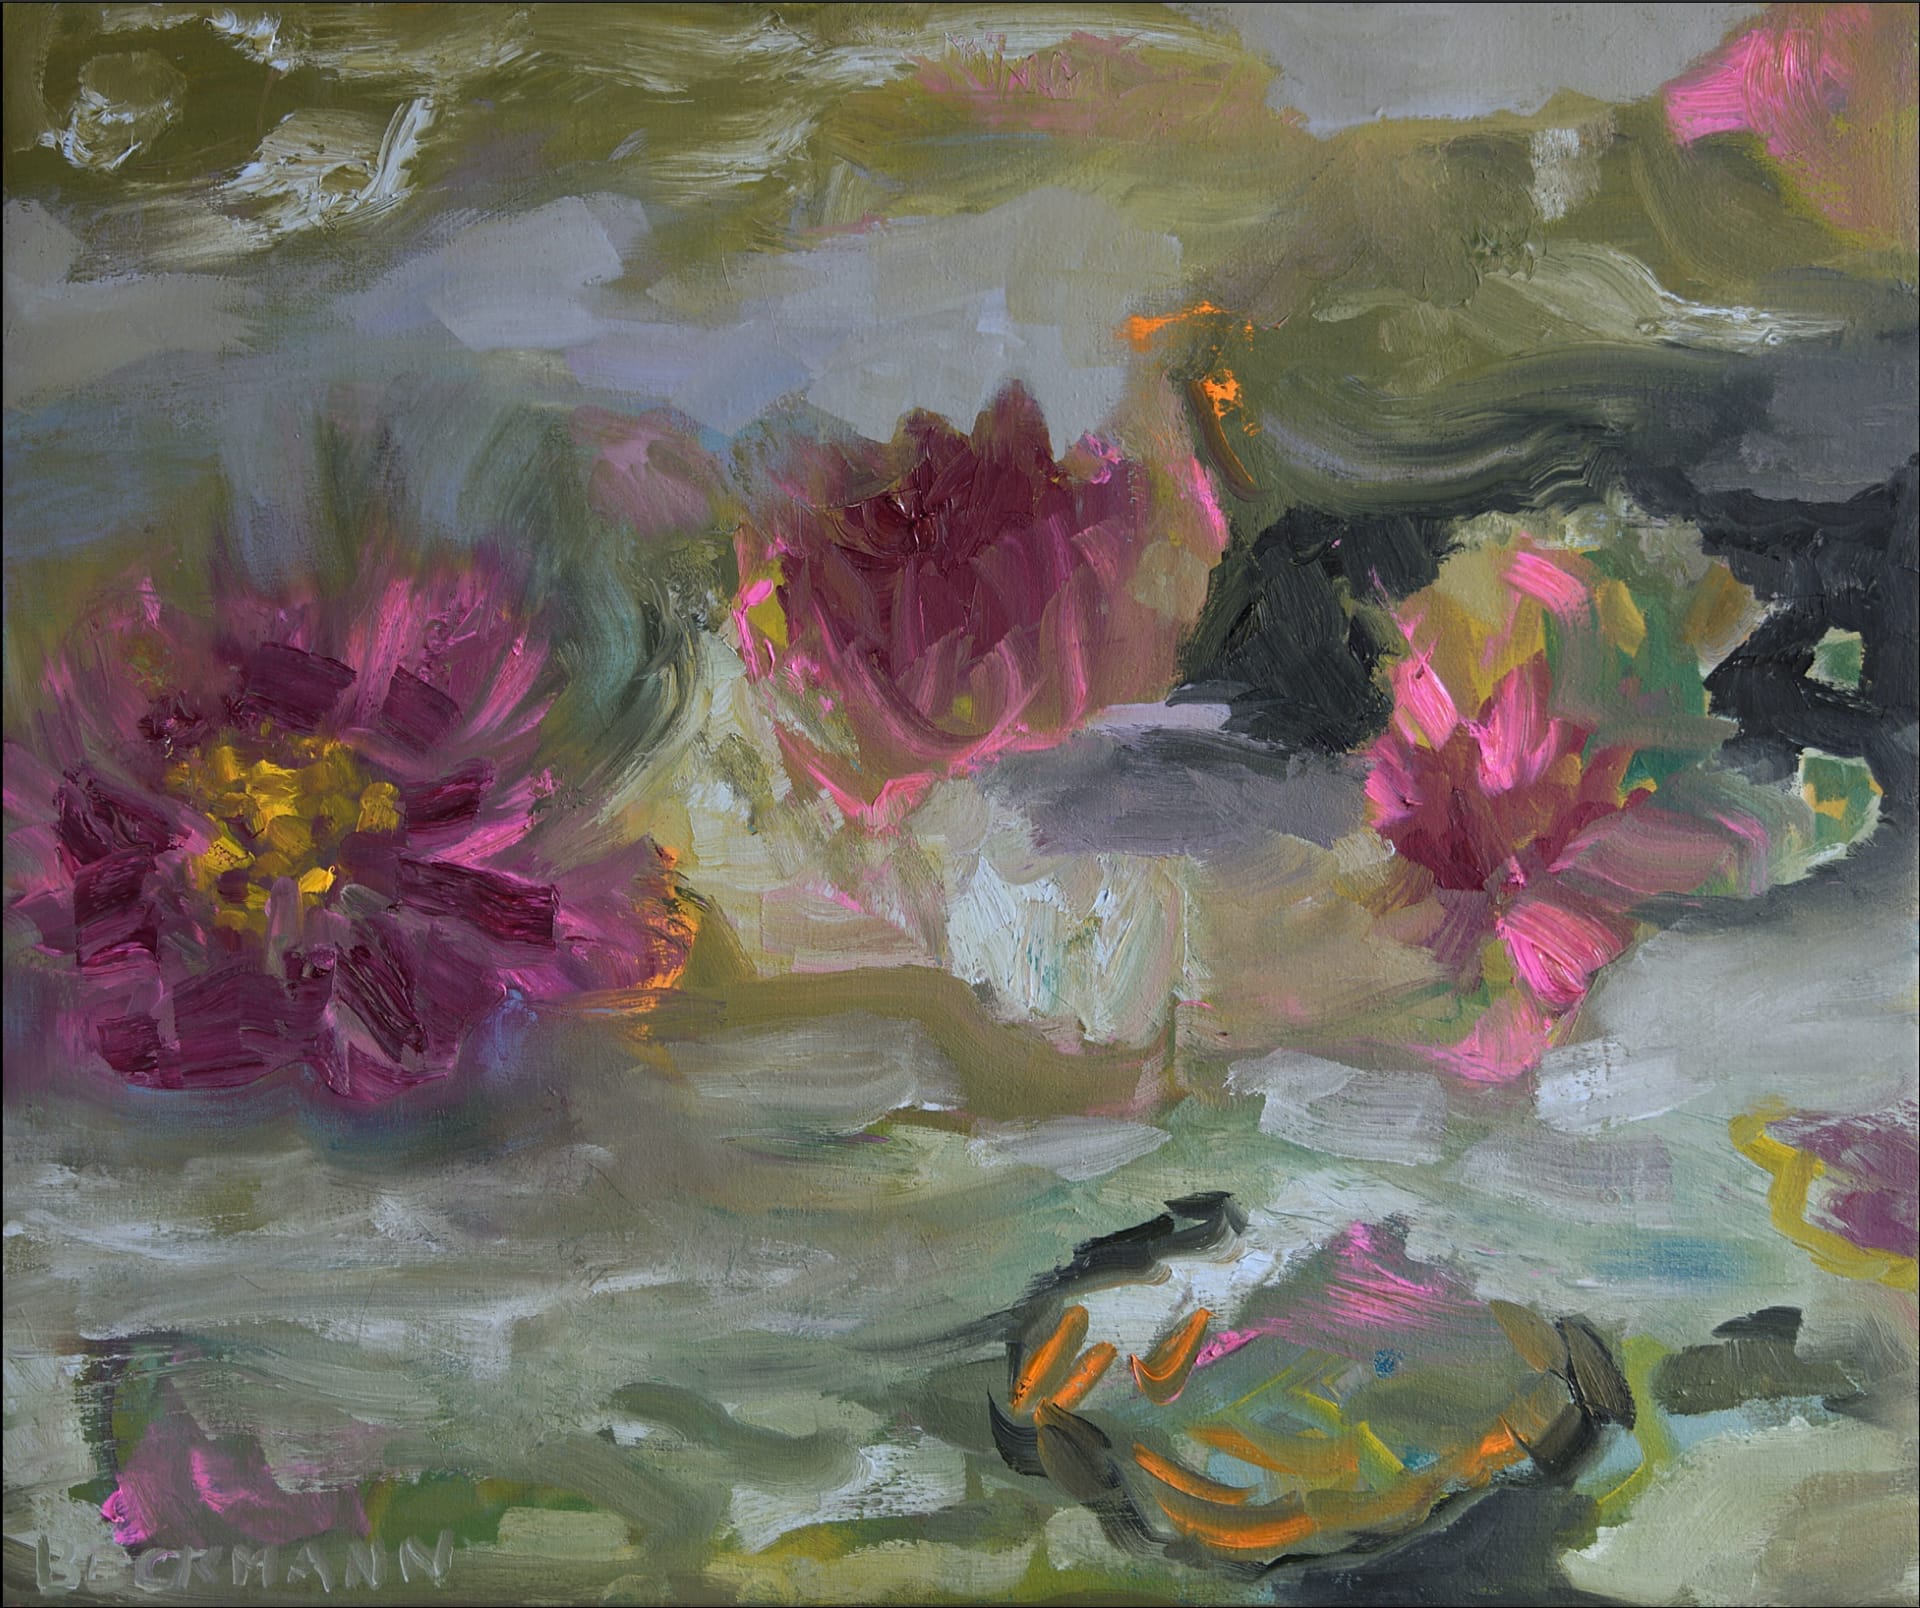 Sabine Beckmann, Remembering Monet, oil on linen, 46 x 55 cm, 2020